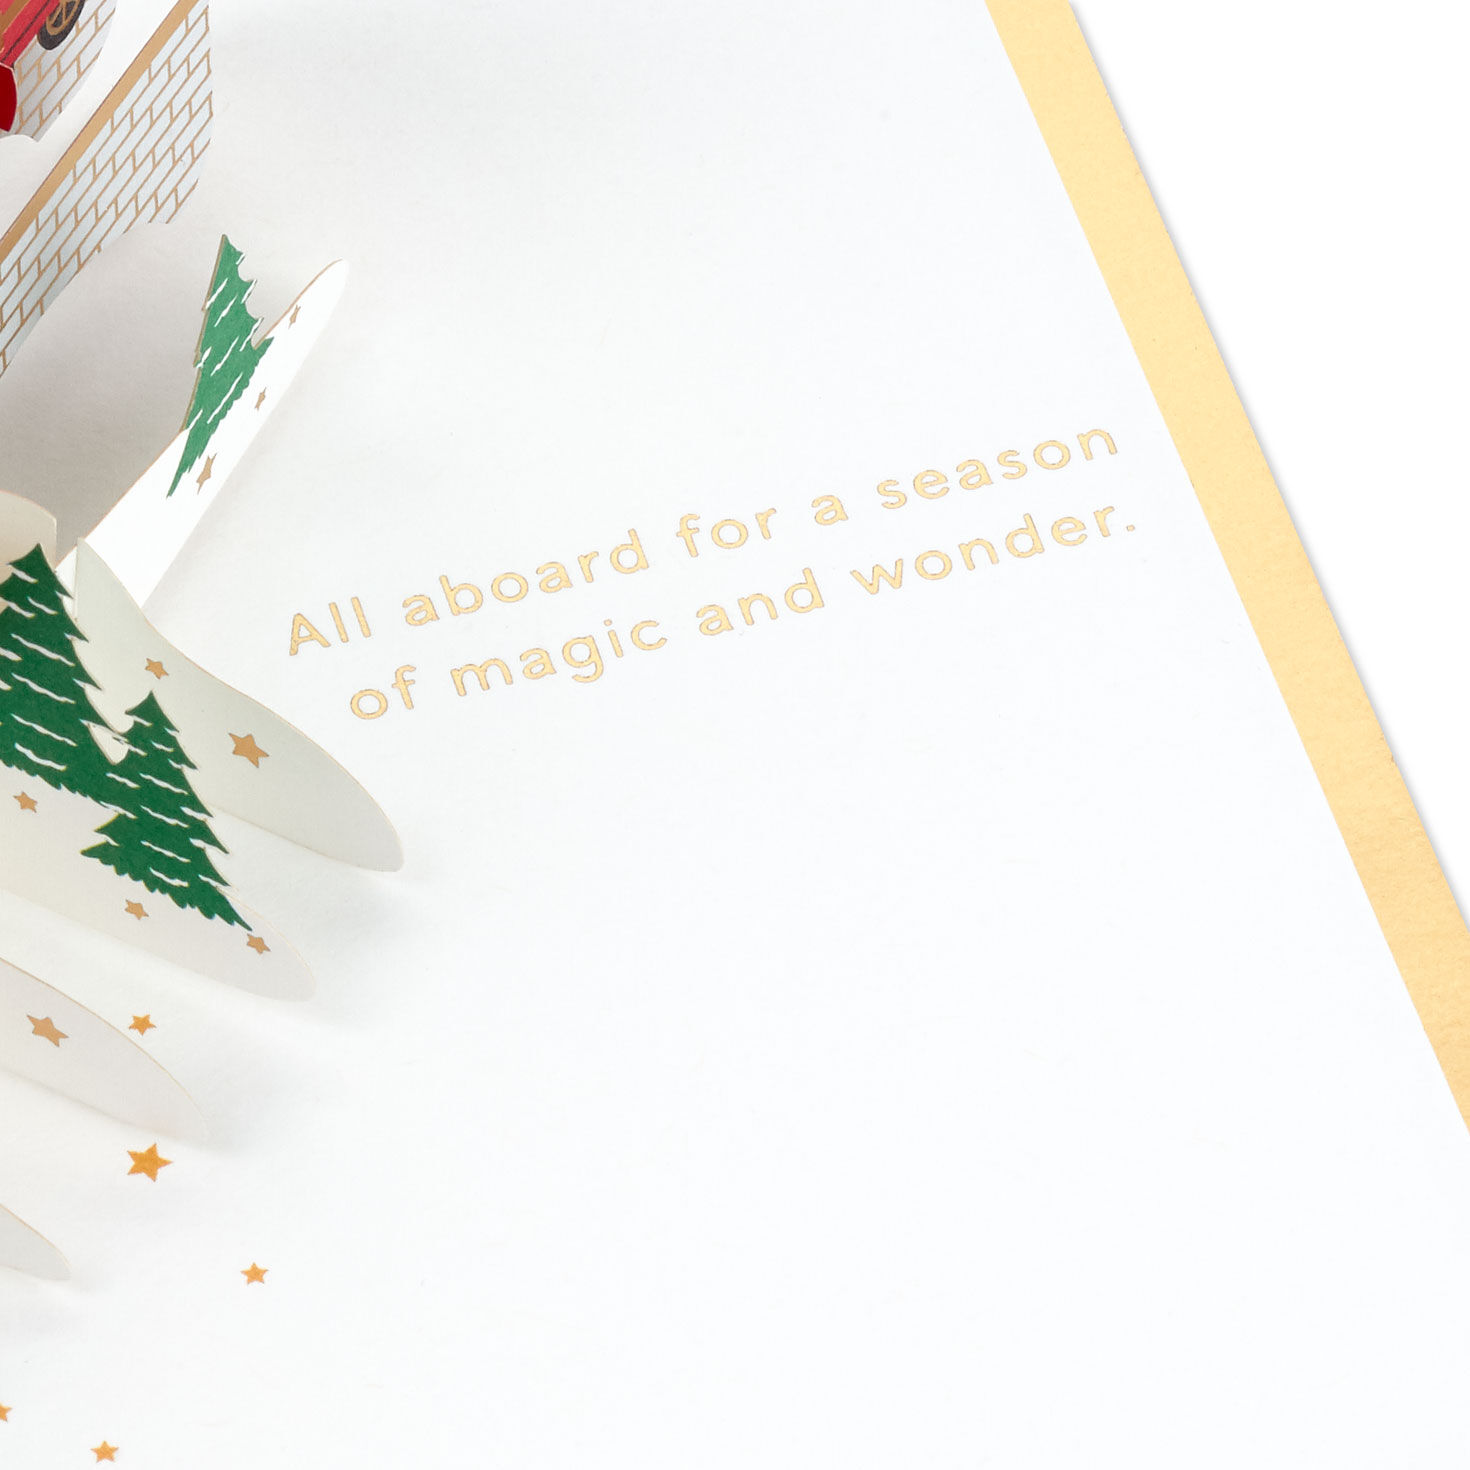 Harry Potter™ Hogwarts™ Express 3D Pop-Up Christmas Card for only USD 14.99 | Hallmark